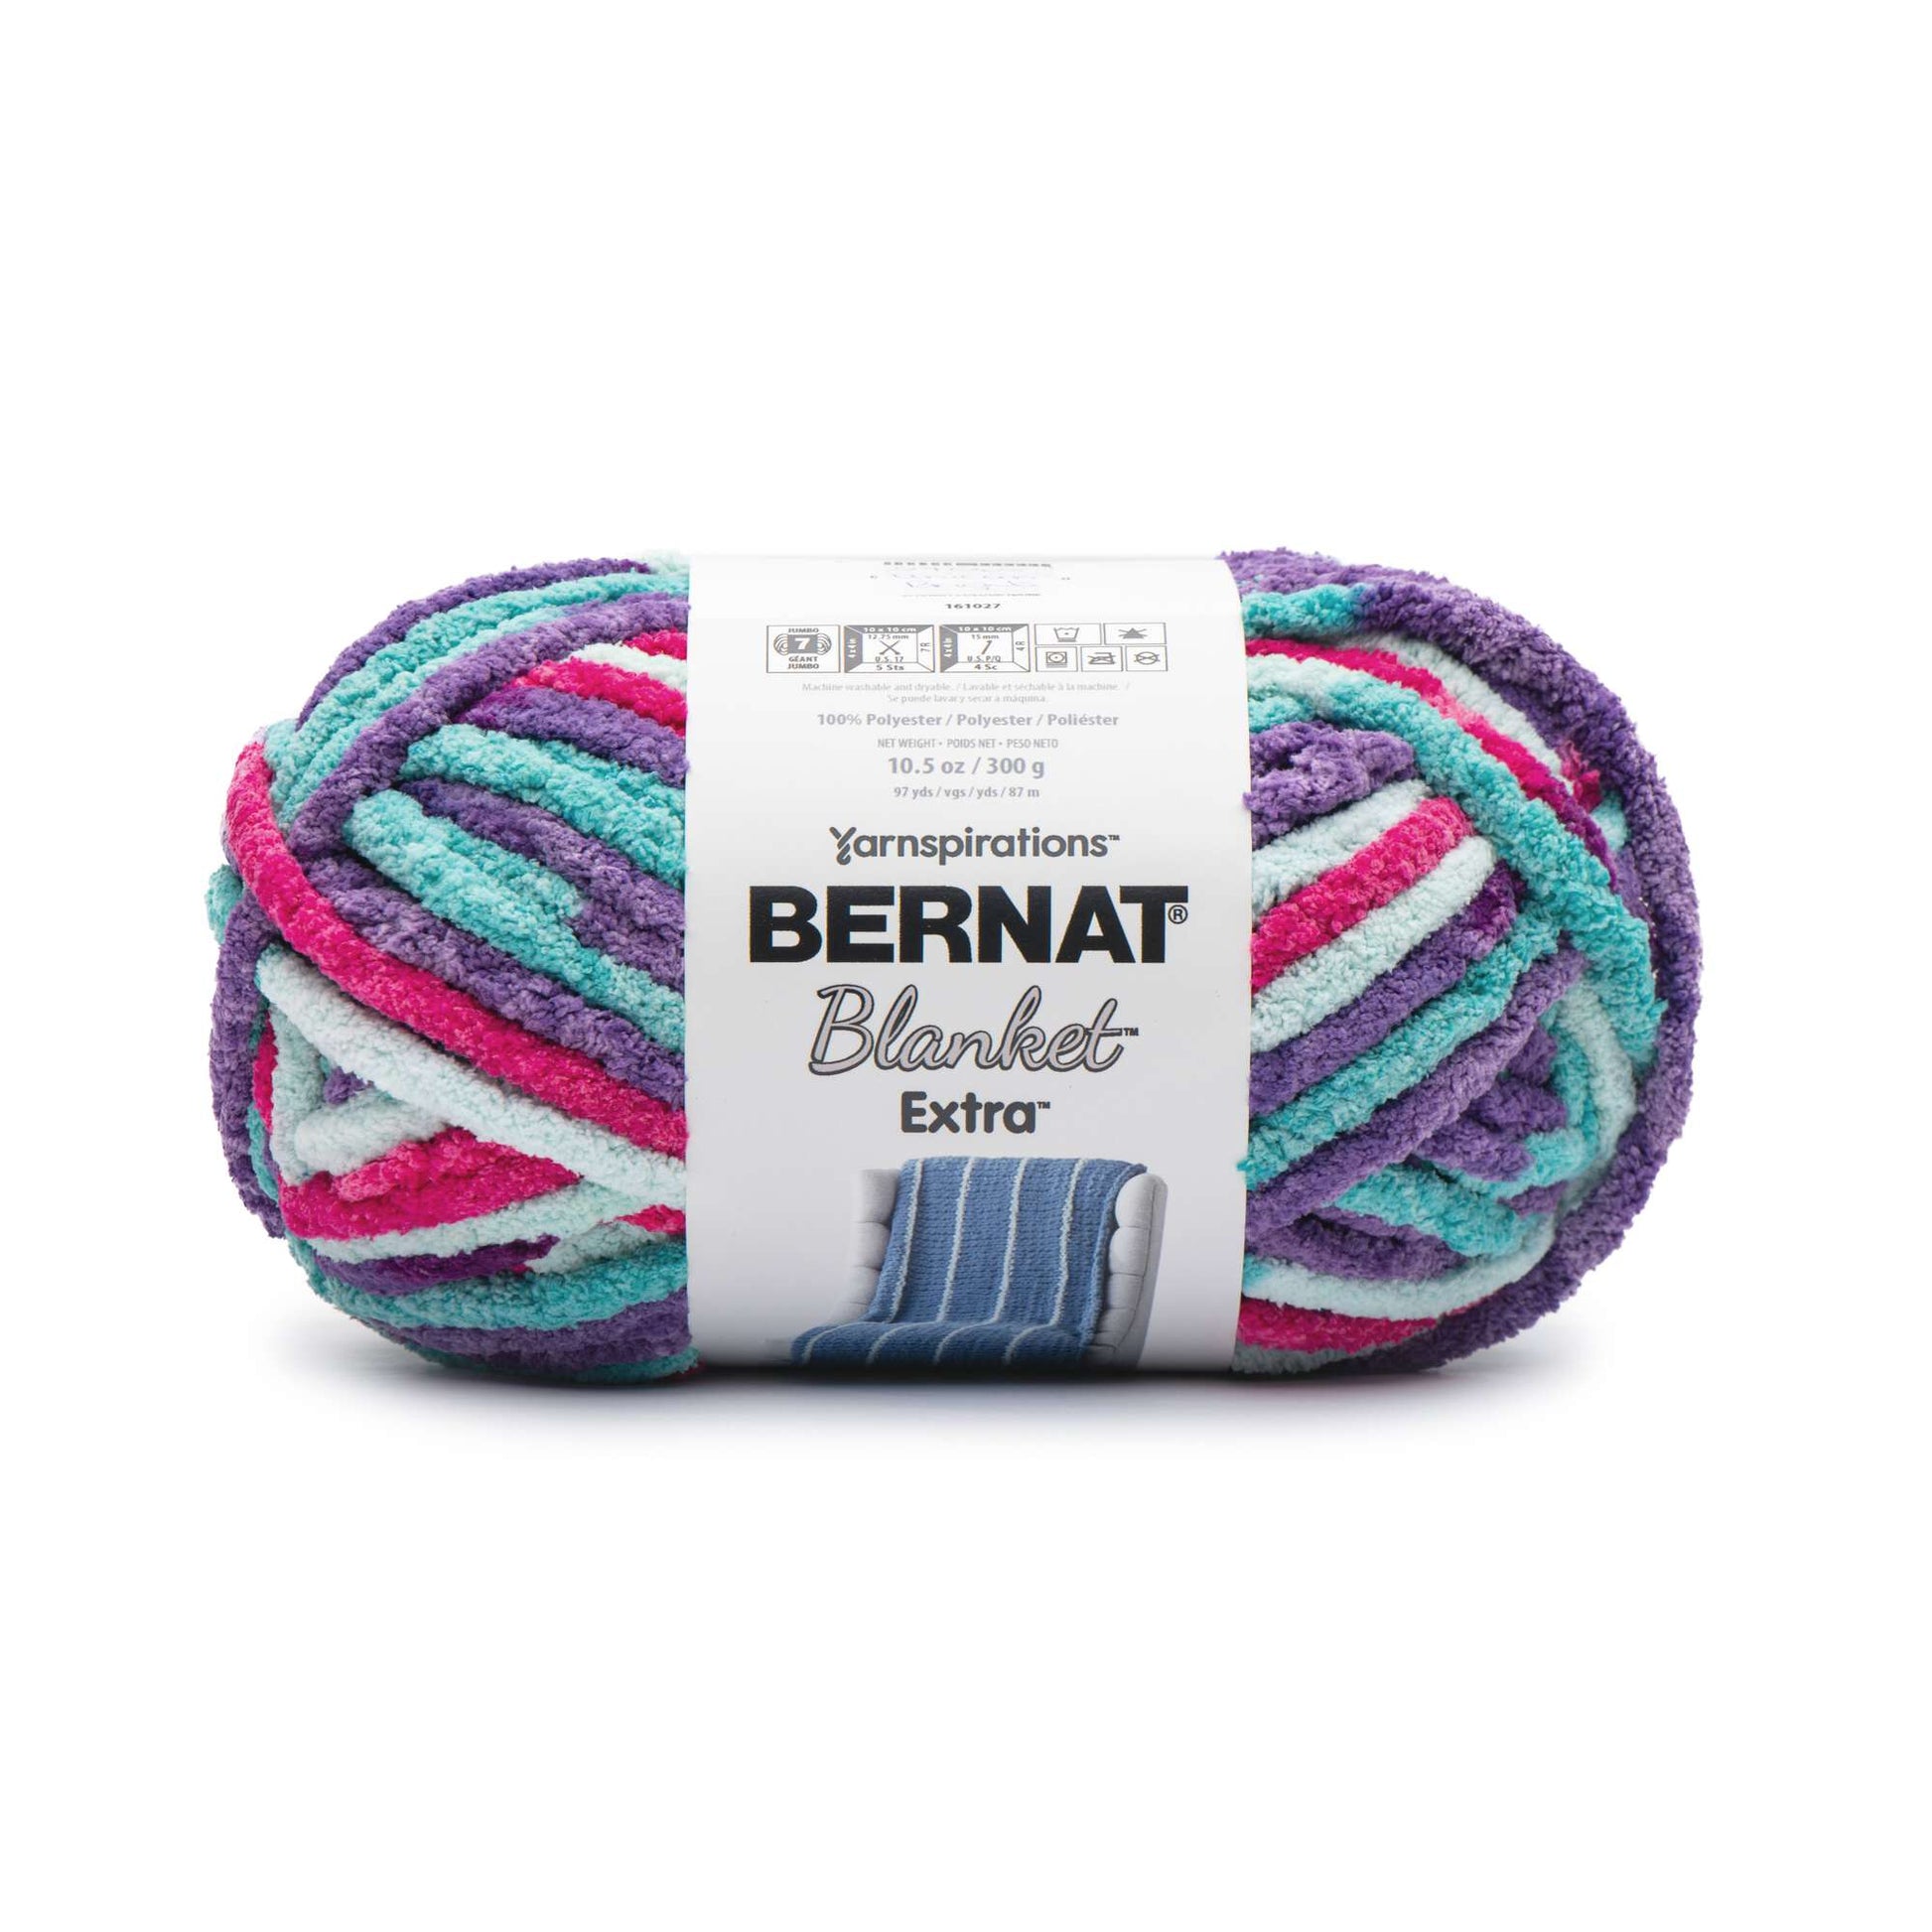 Bernat Blanket Extra Yarn (300g/10.5oz) - Clearance Shades* Unicorn Brights Varg